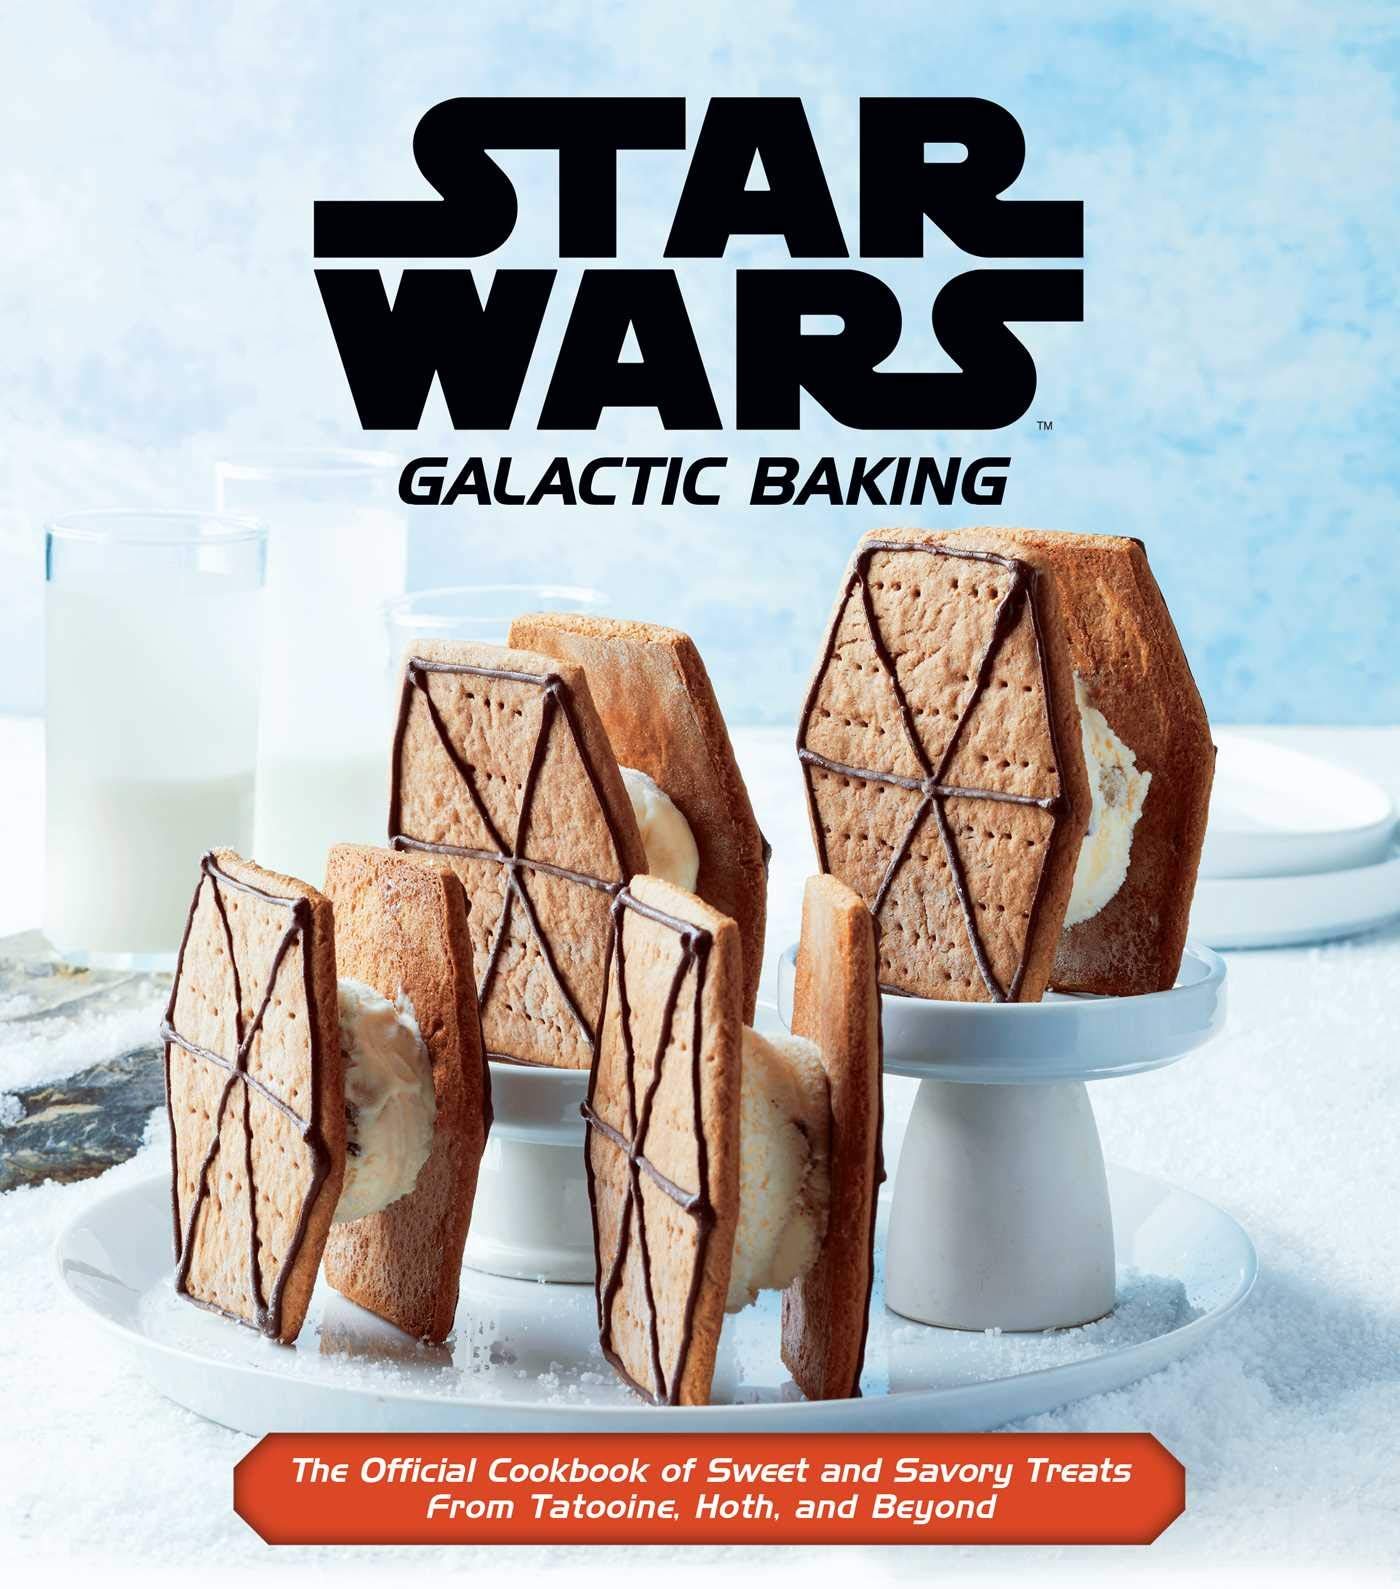 Star Wars: Galactic Baking cookbook